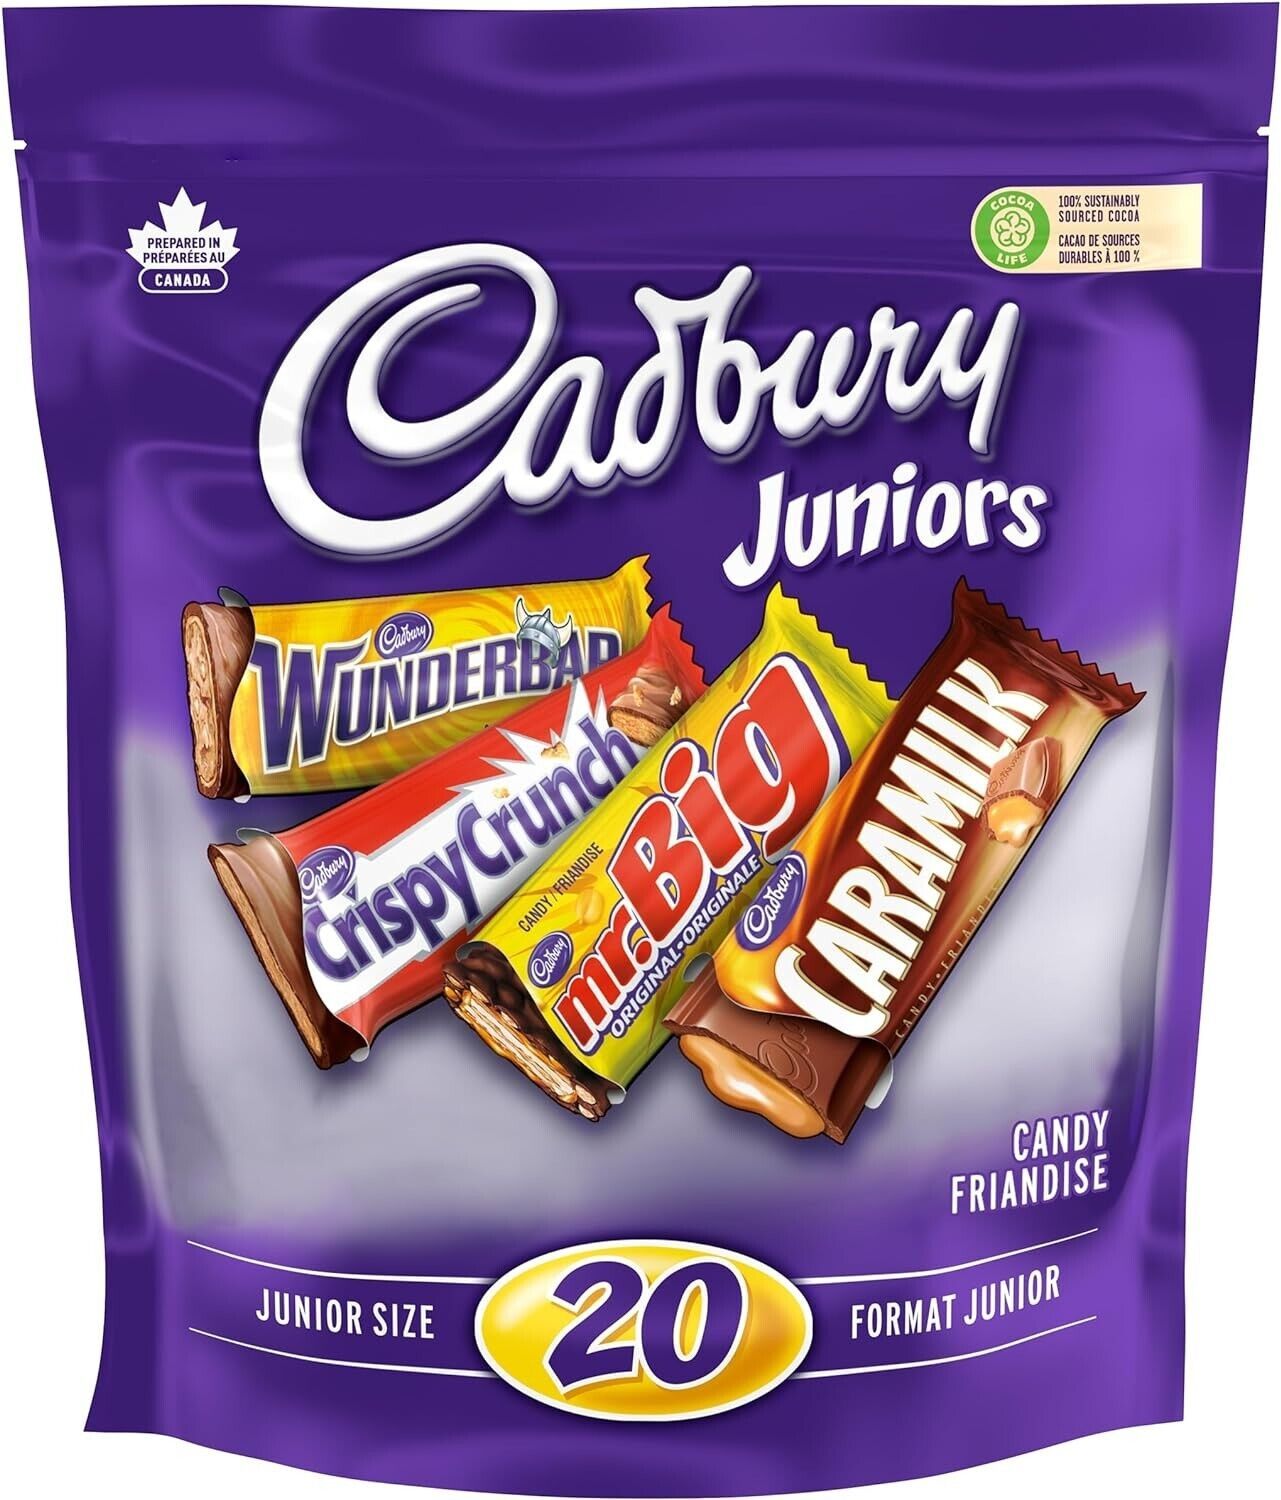 Cadbury Assorted Chocolatey Candy Bars (20 Mini Bars), Caramilk, Mr. Big, Crisp - $16.82